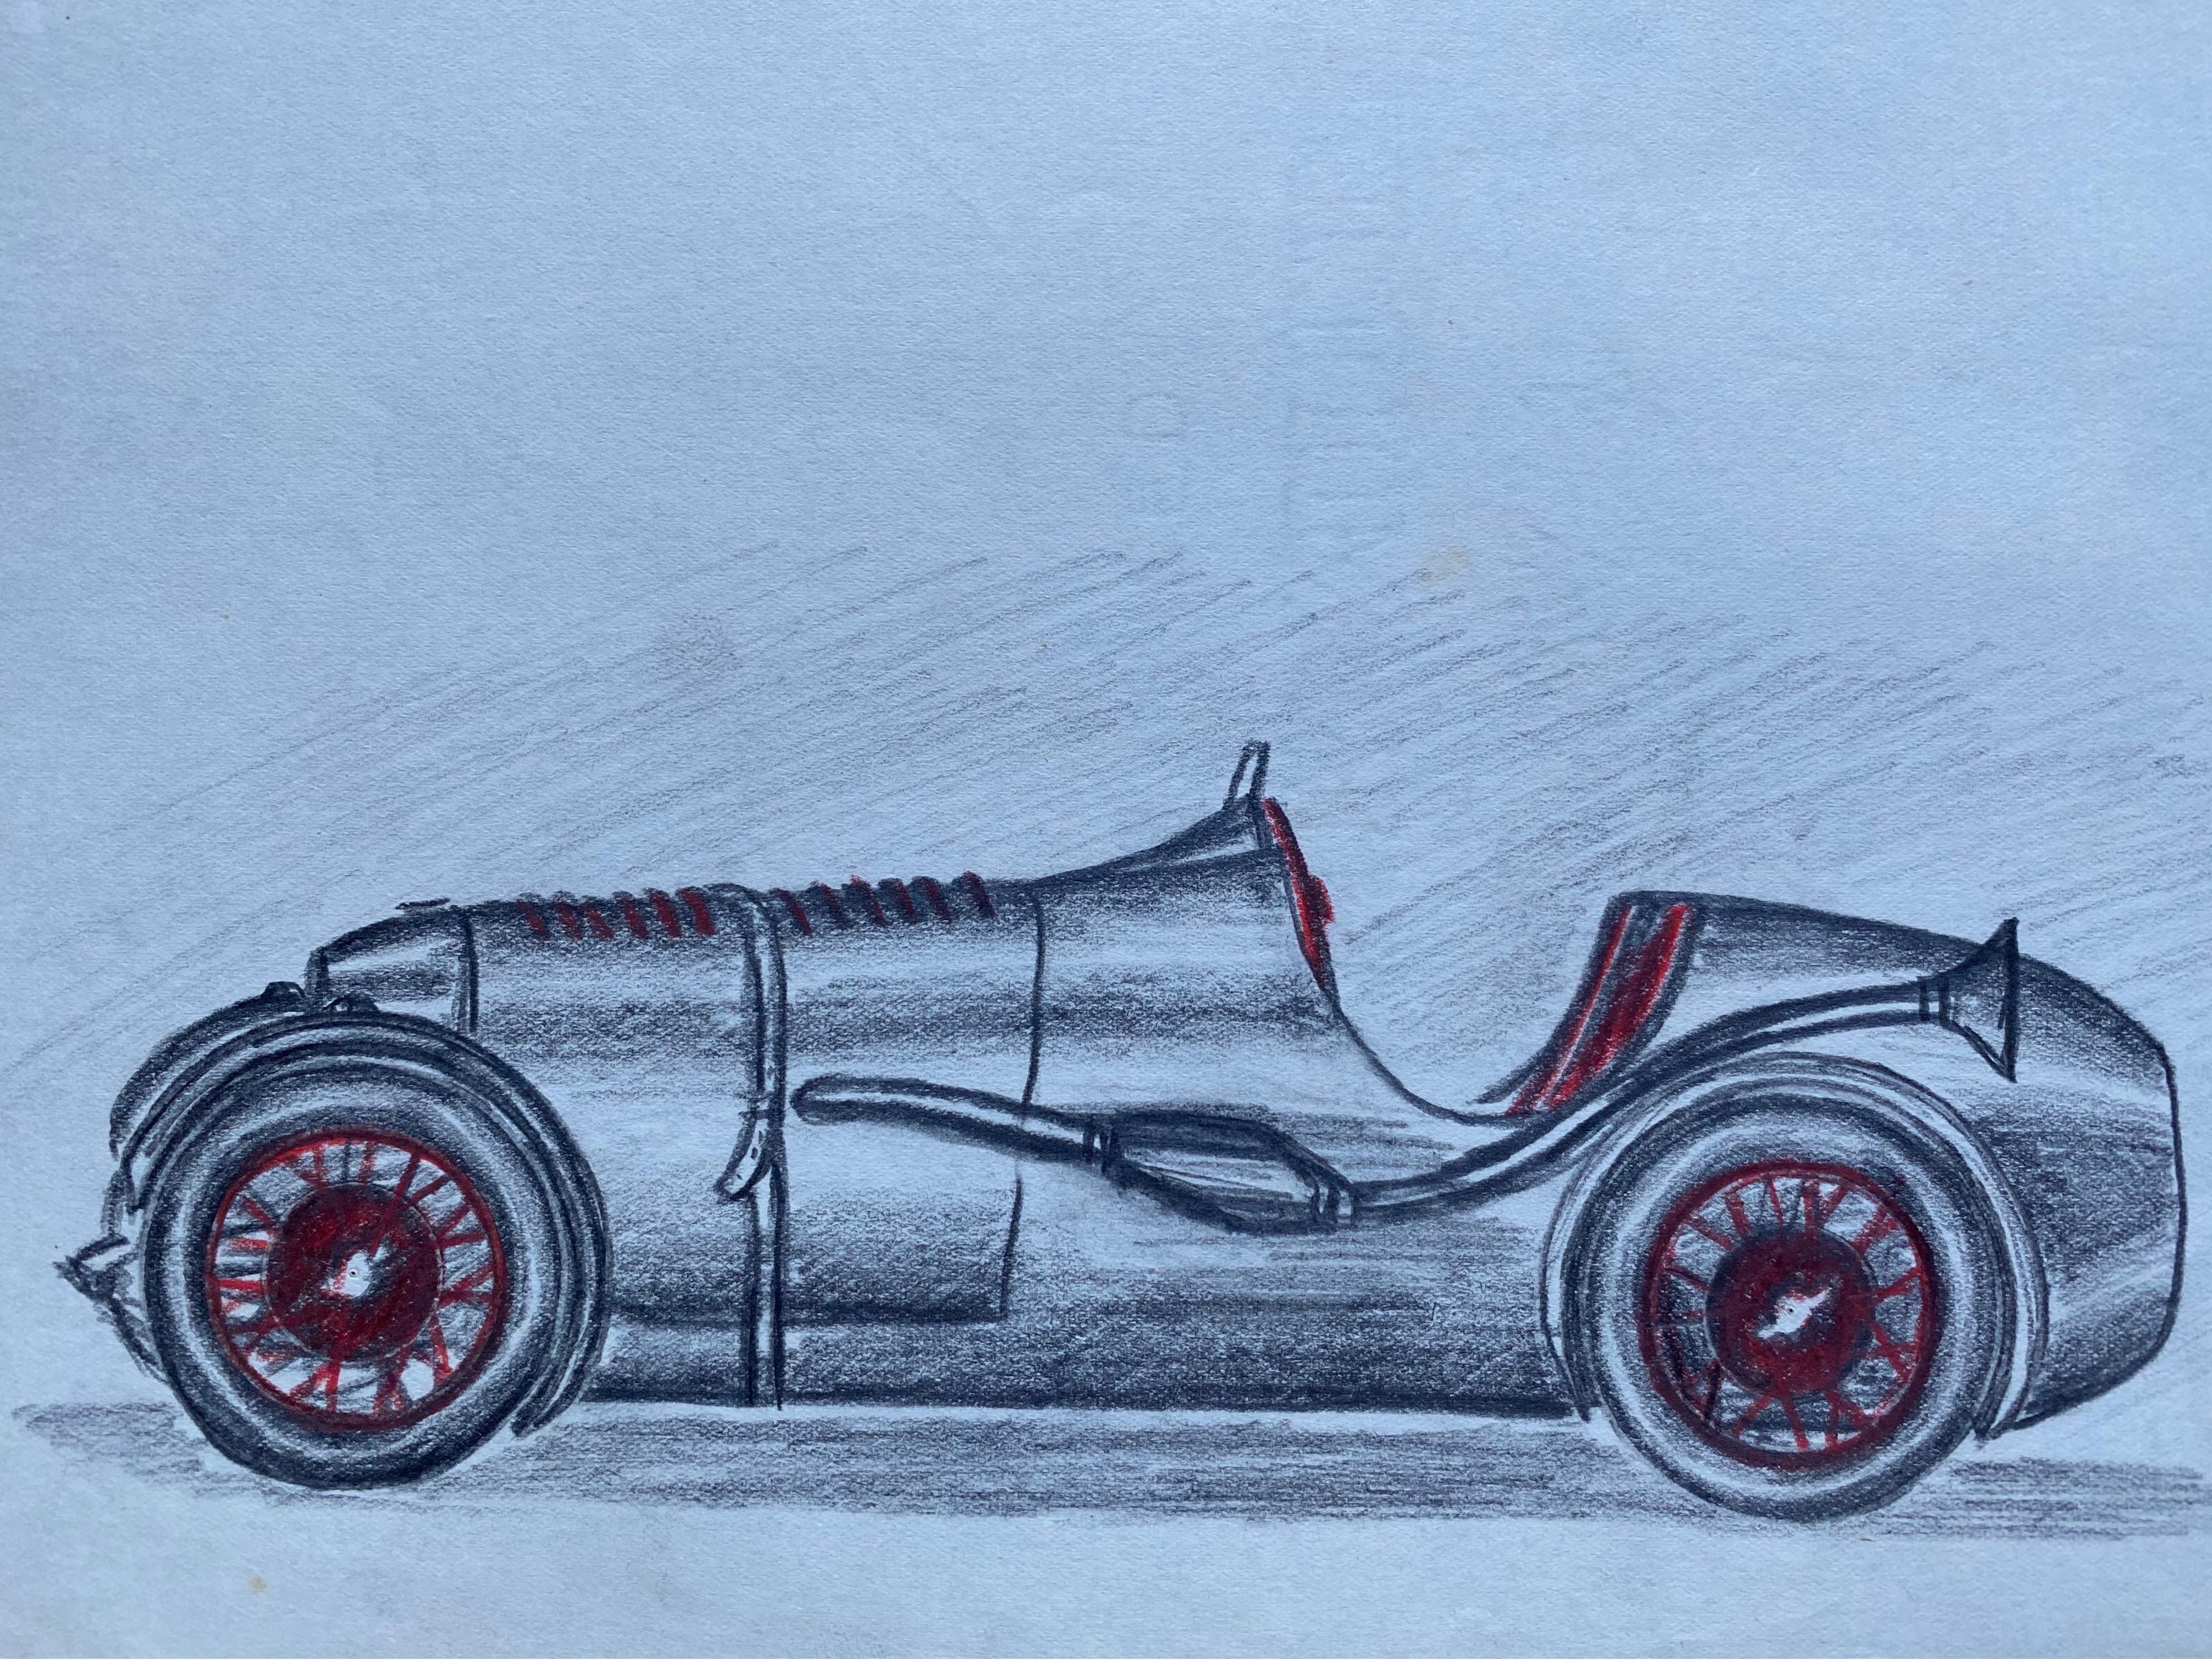 1930's race car